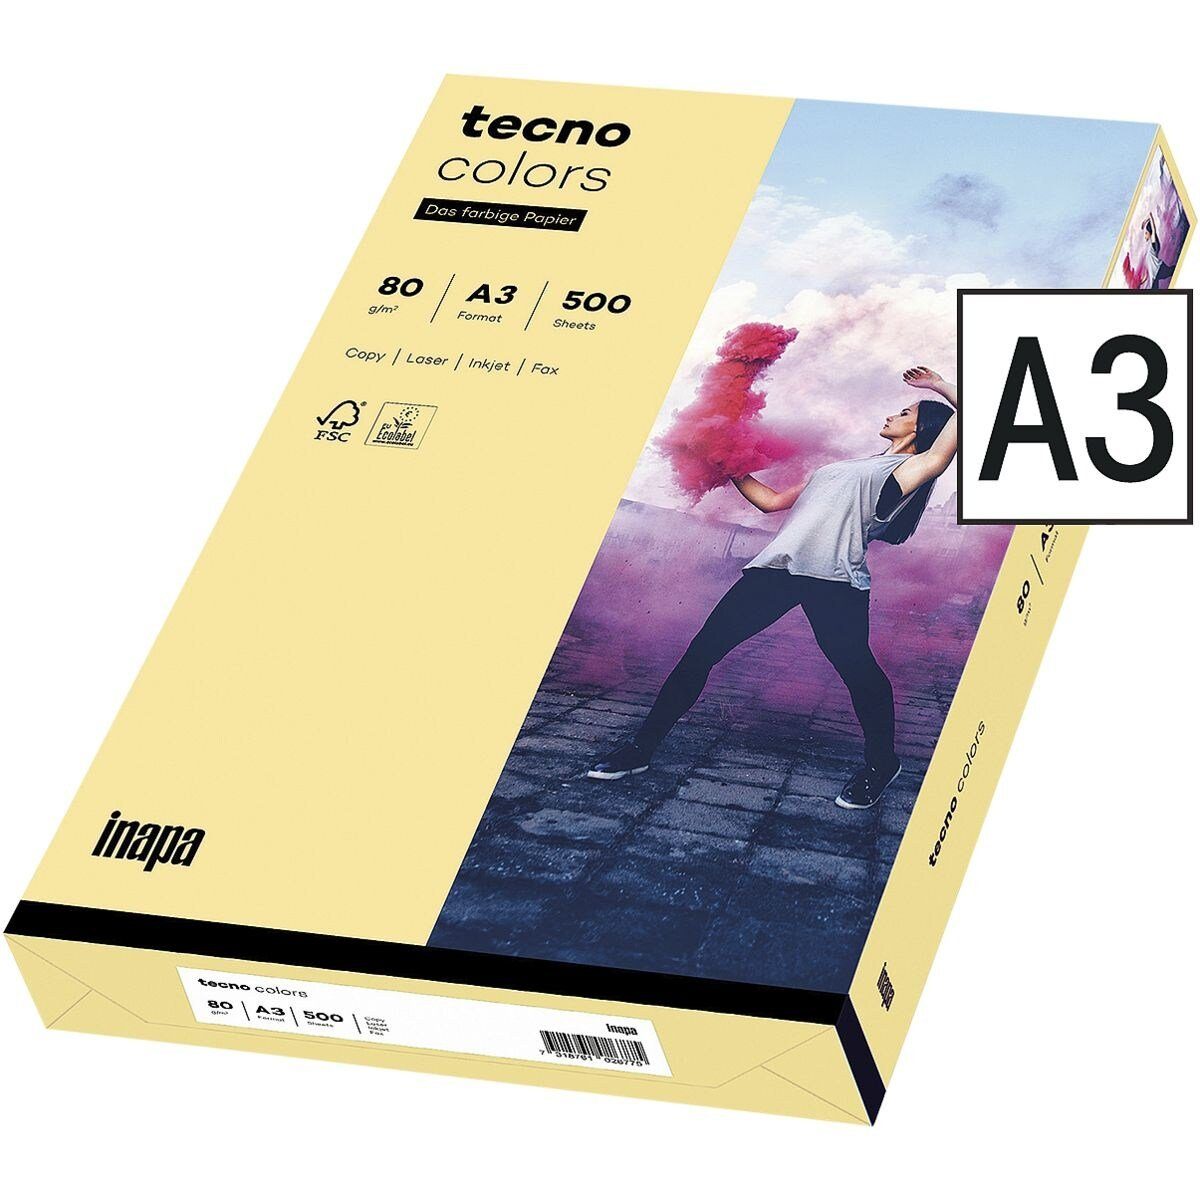 Drucker- 80 tecno Blatt A3, chamois g/m², tecno / Format Colors, DIN 500 und Inapa Pastellfarben, Kopierpapier Rainbow